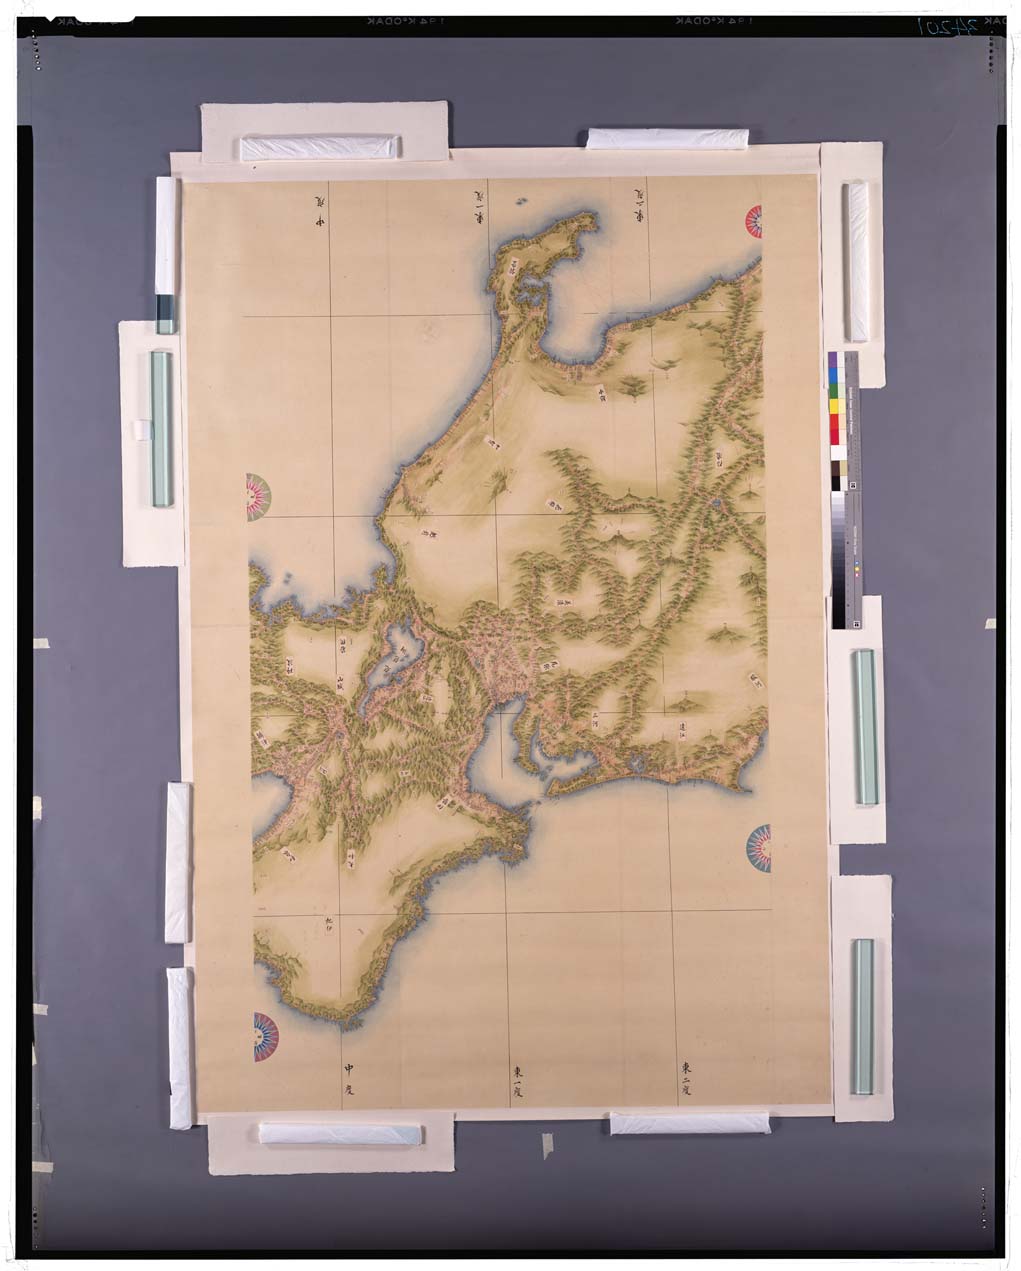 C 日本沿海輿地図 中図 中部 近畿 東京国立博物館 画像検索